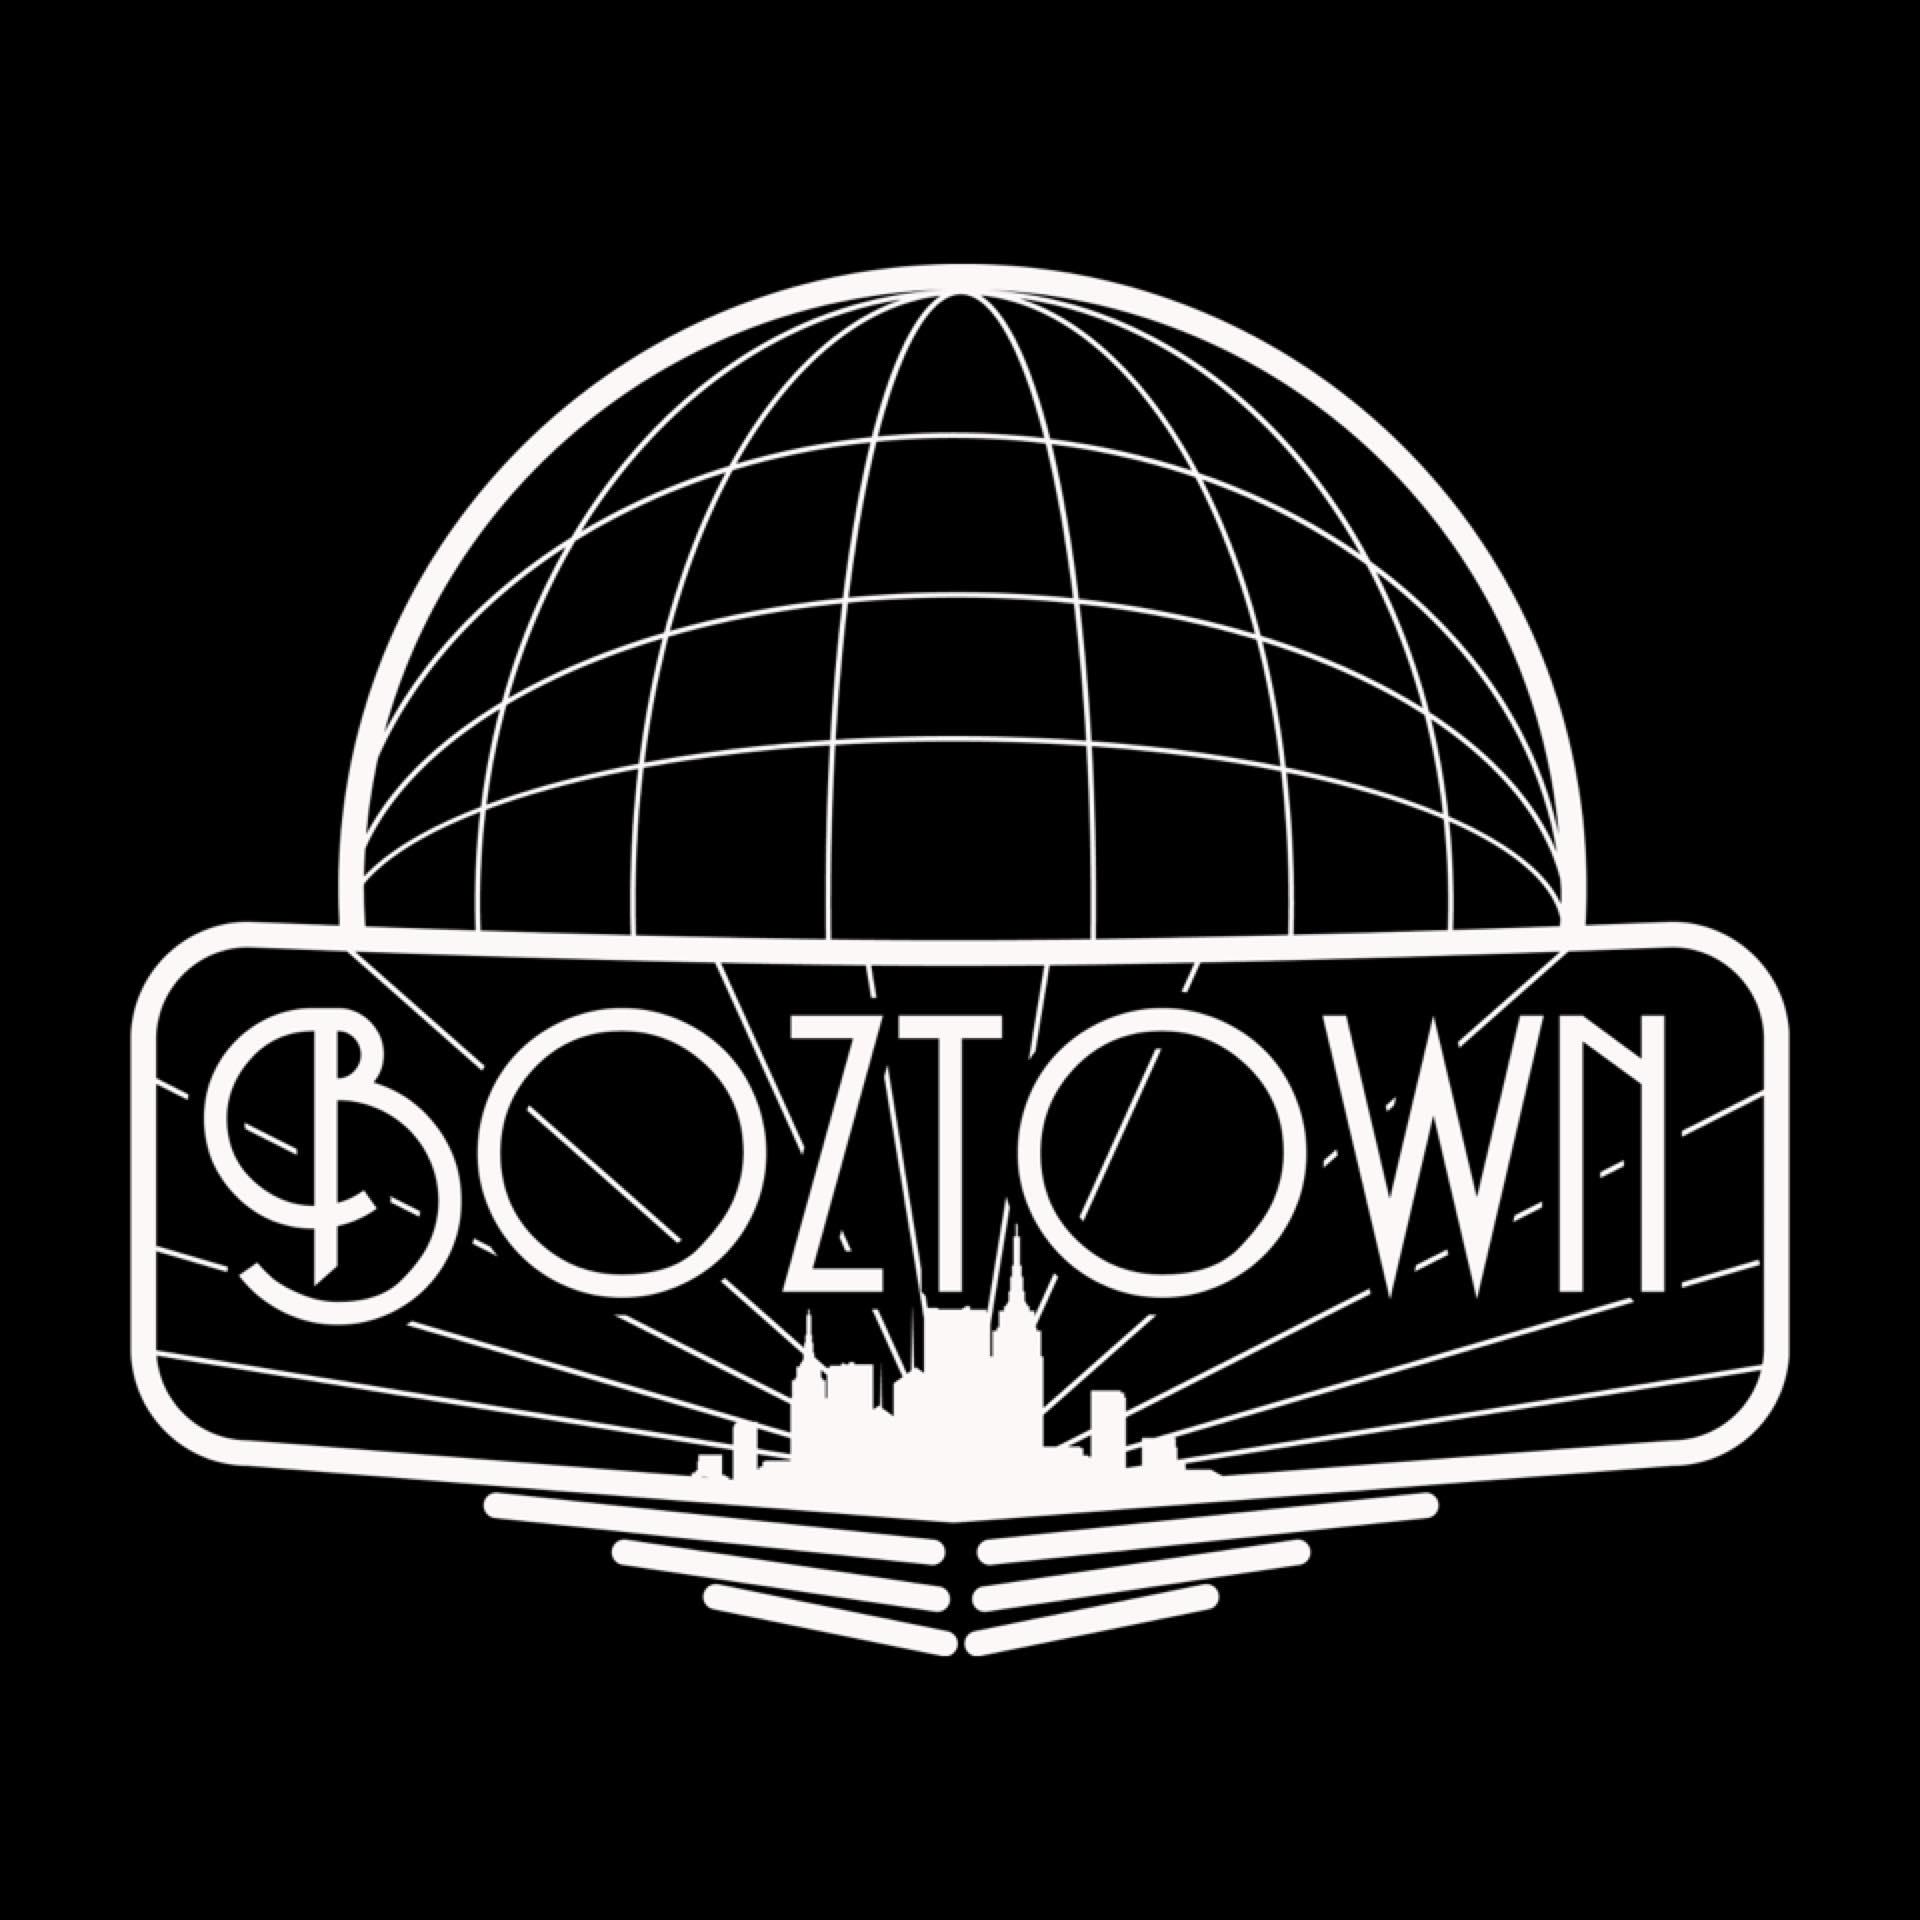 Boztown